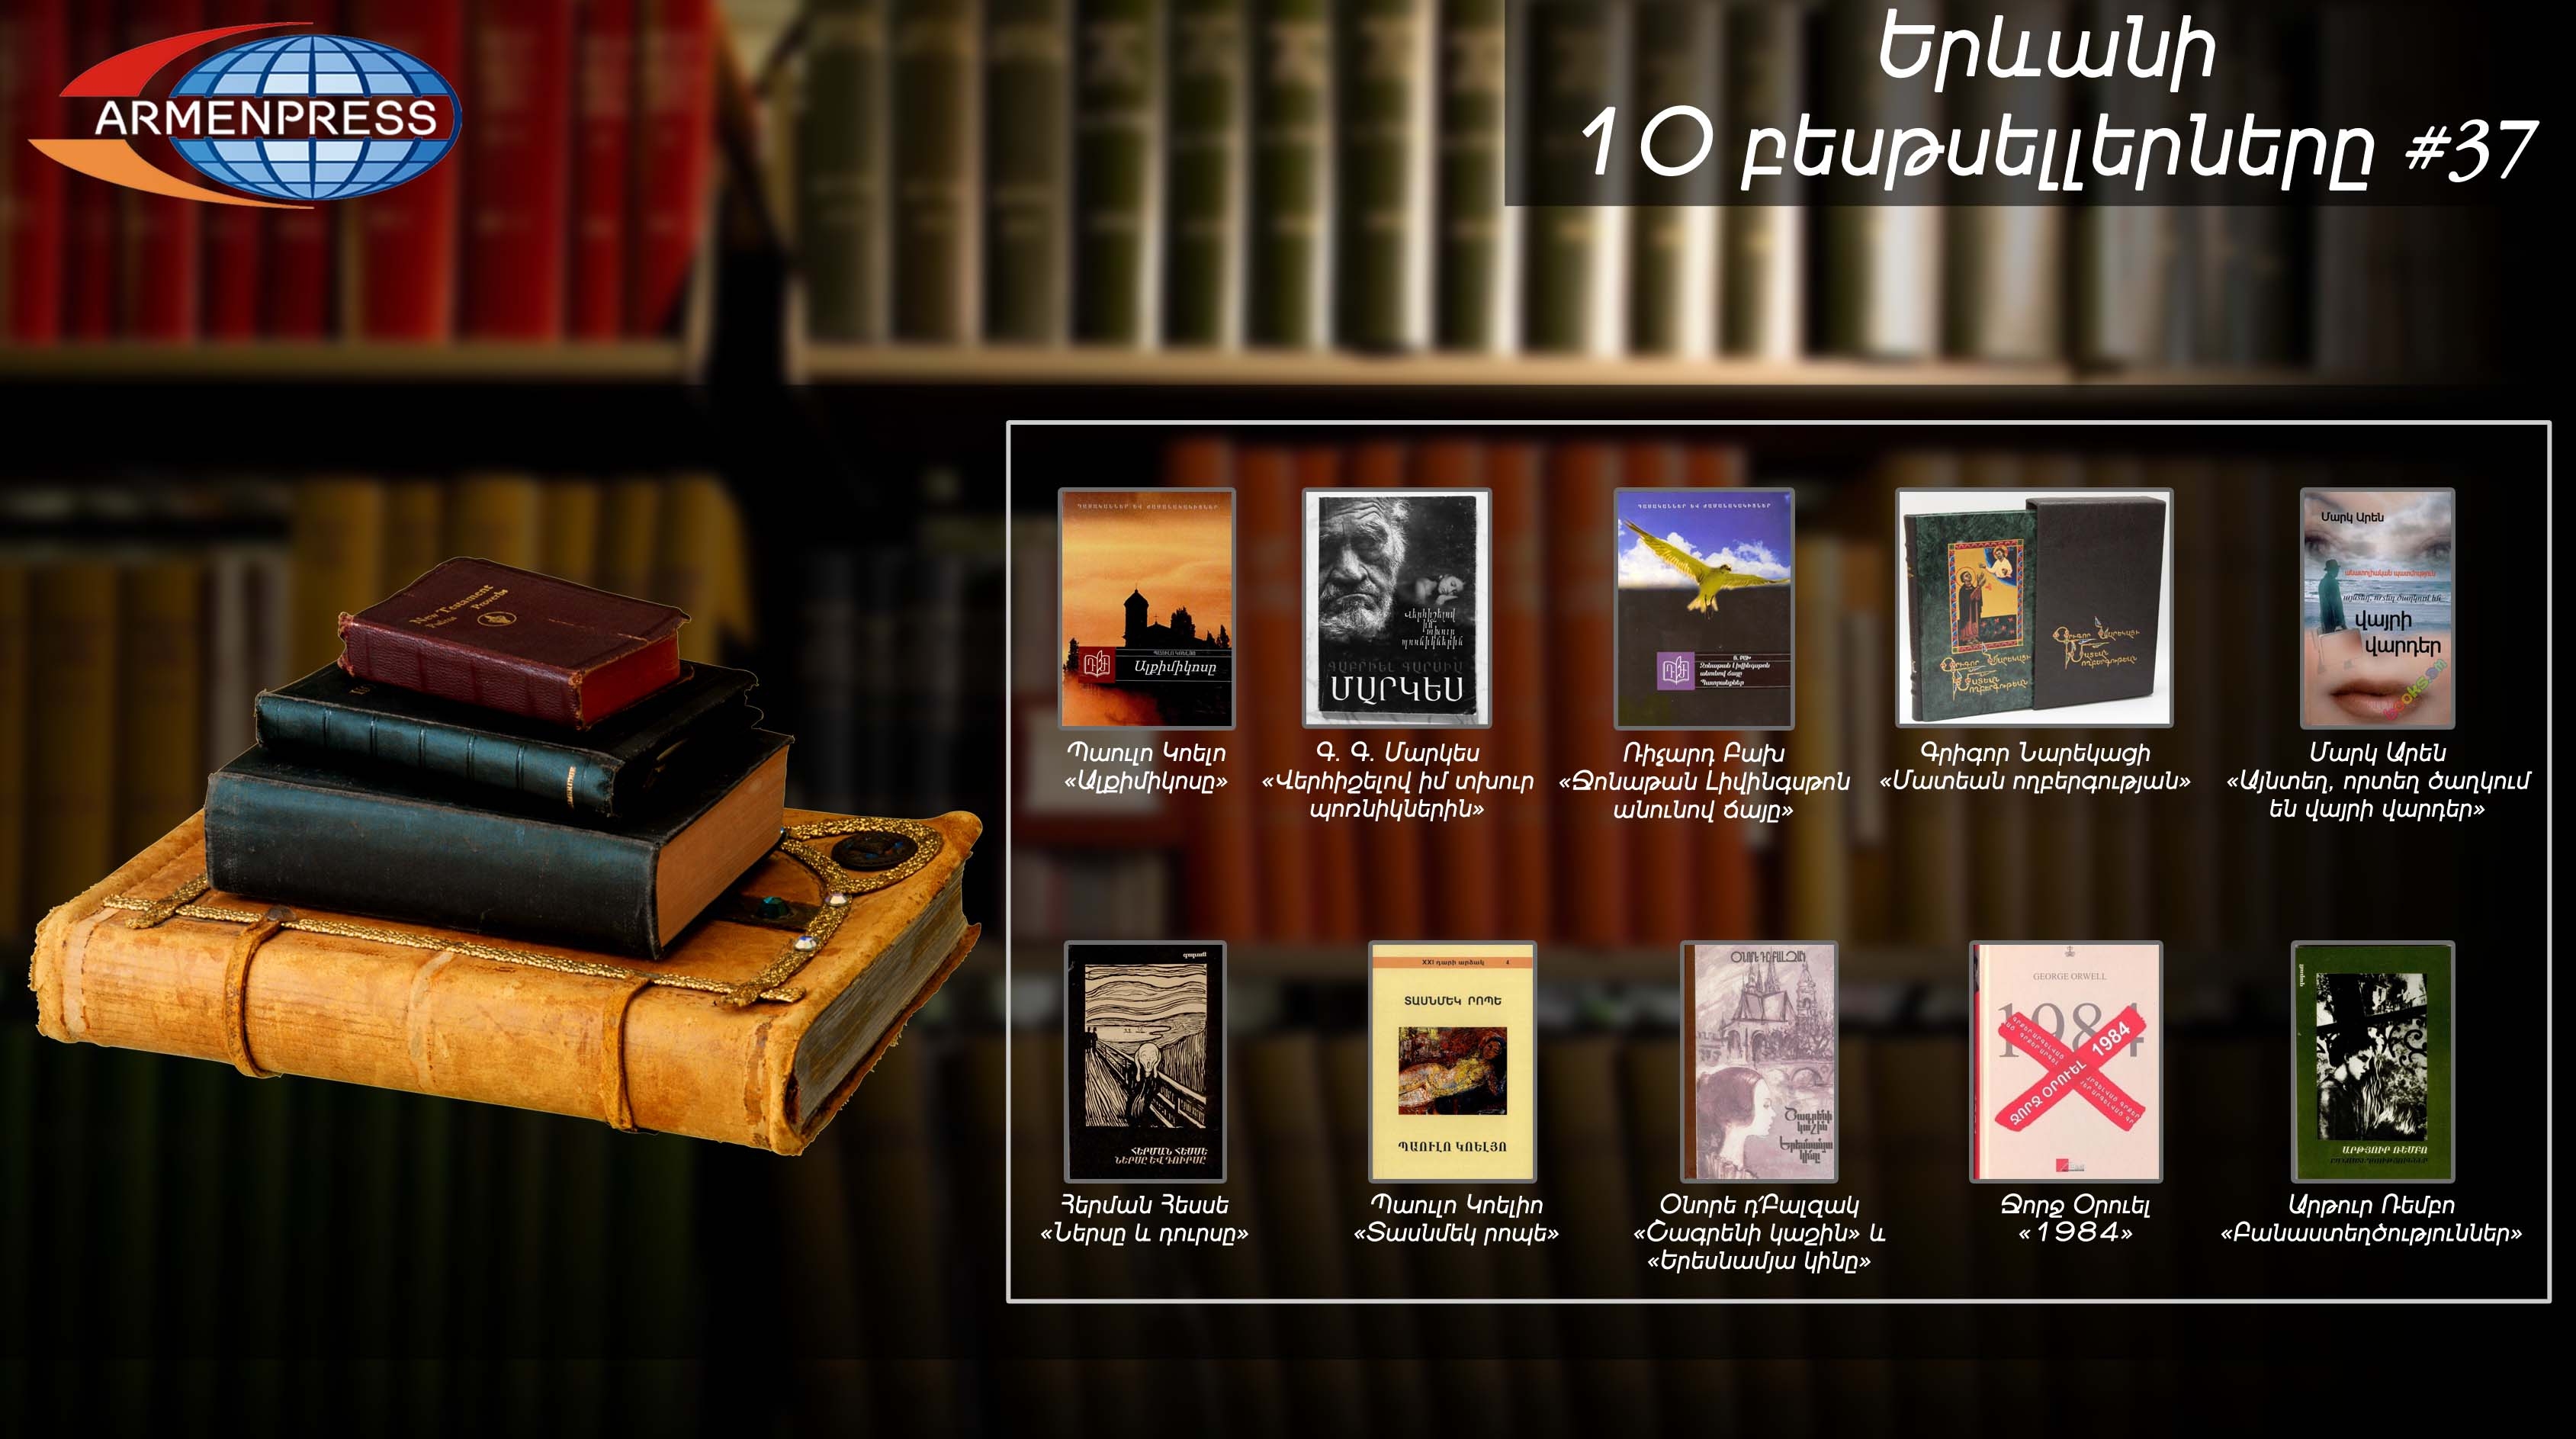 "Armenpress" introduces 37th bestseller books list